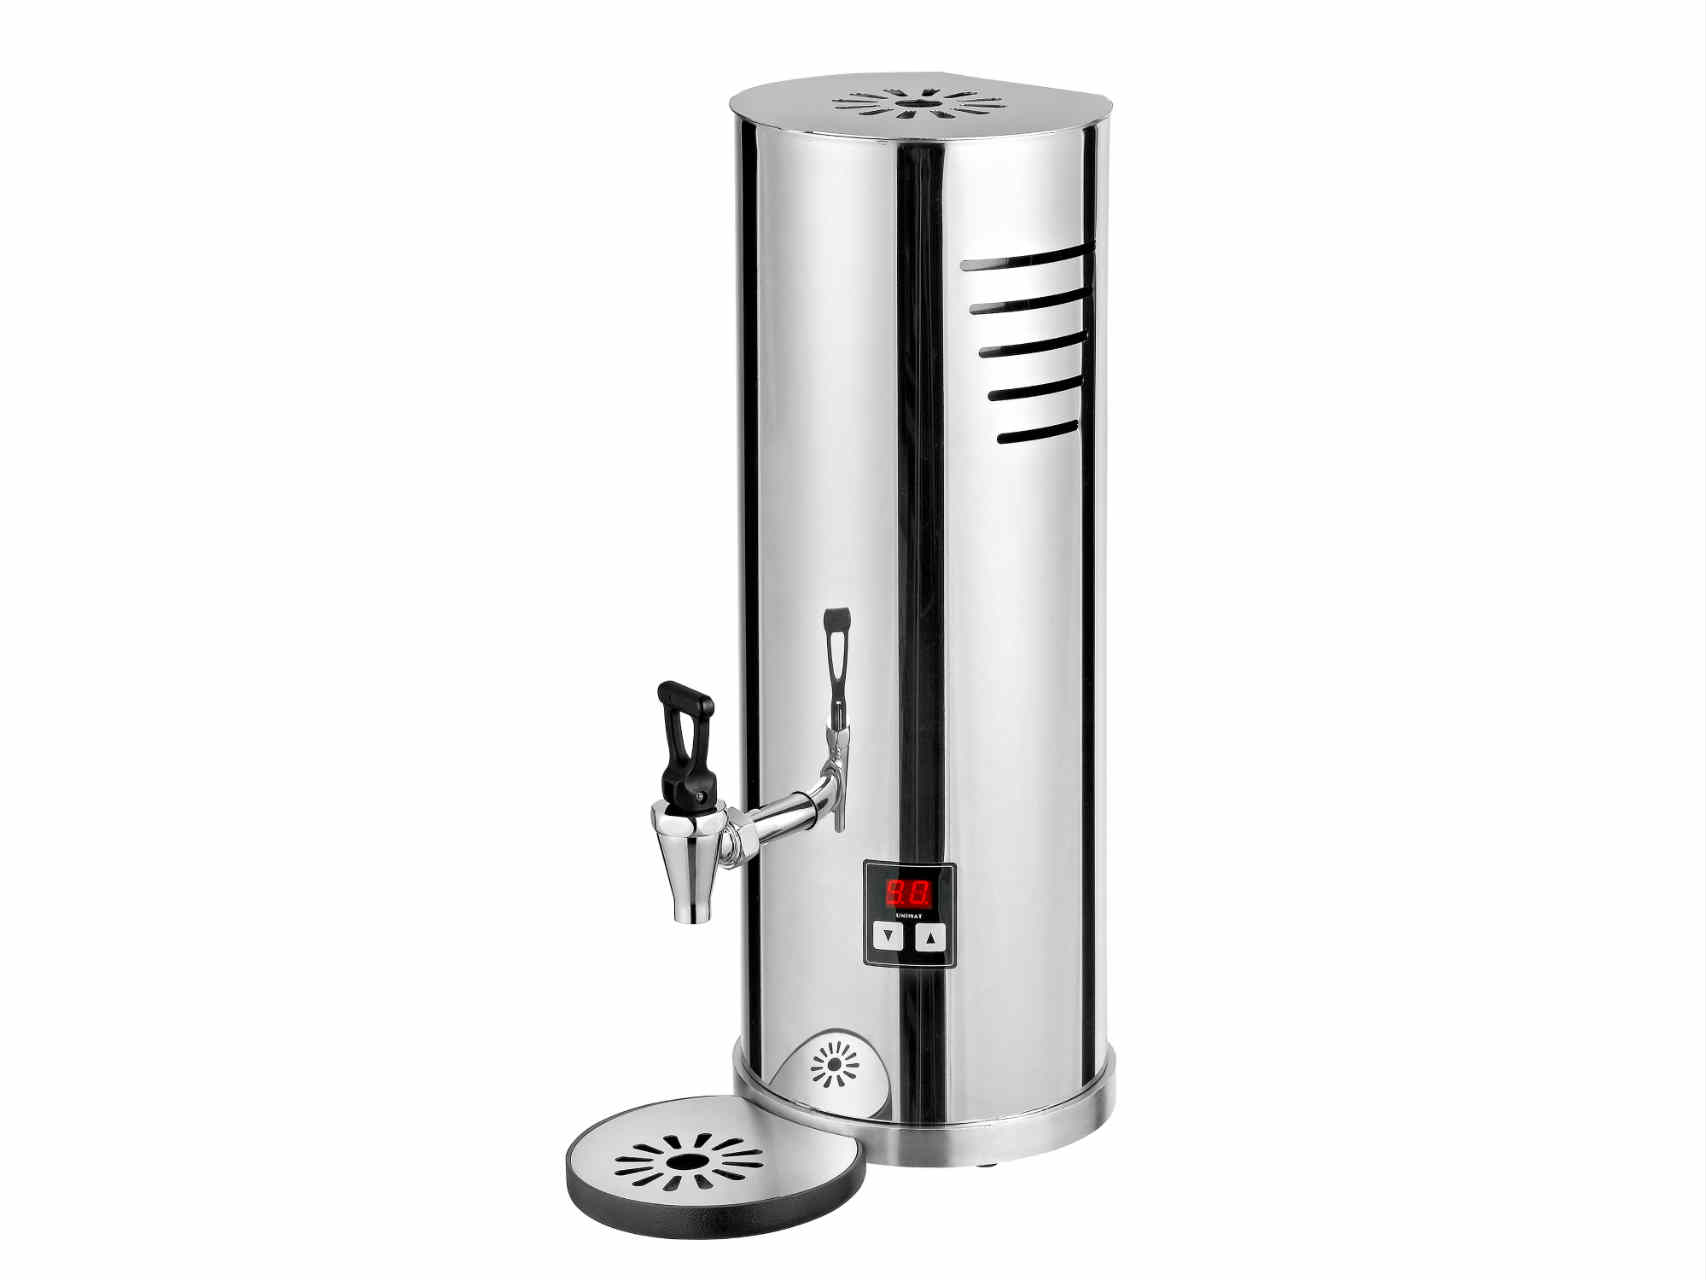 (2100 Teemaschine Teeautomat, ) Watt, Samowar, Frankfurt Heißwasserbereiter UNIMMAT